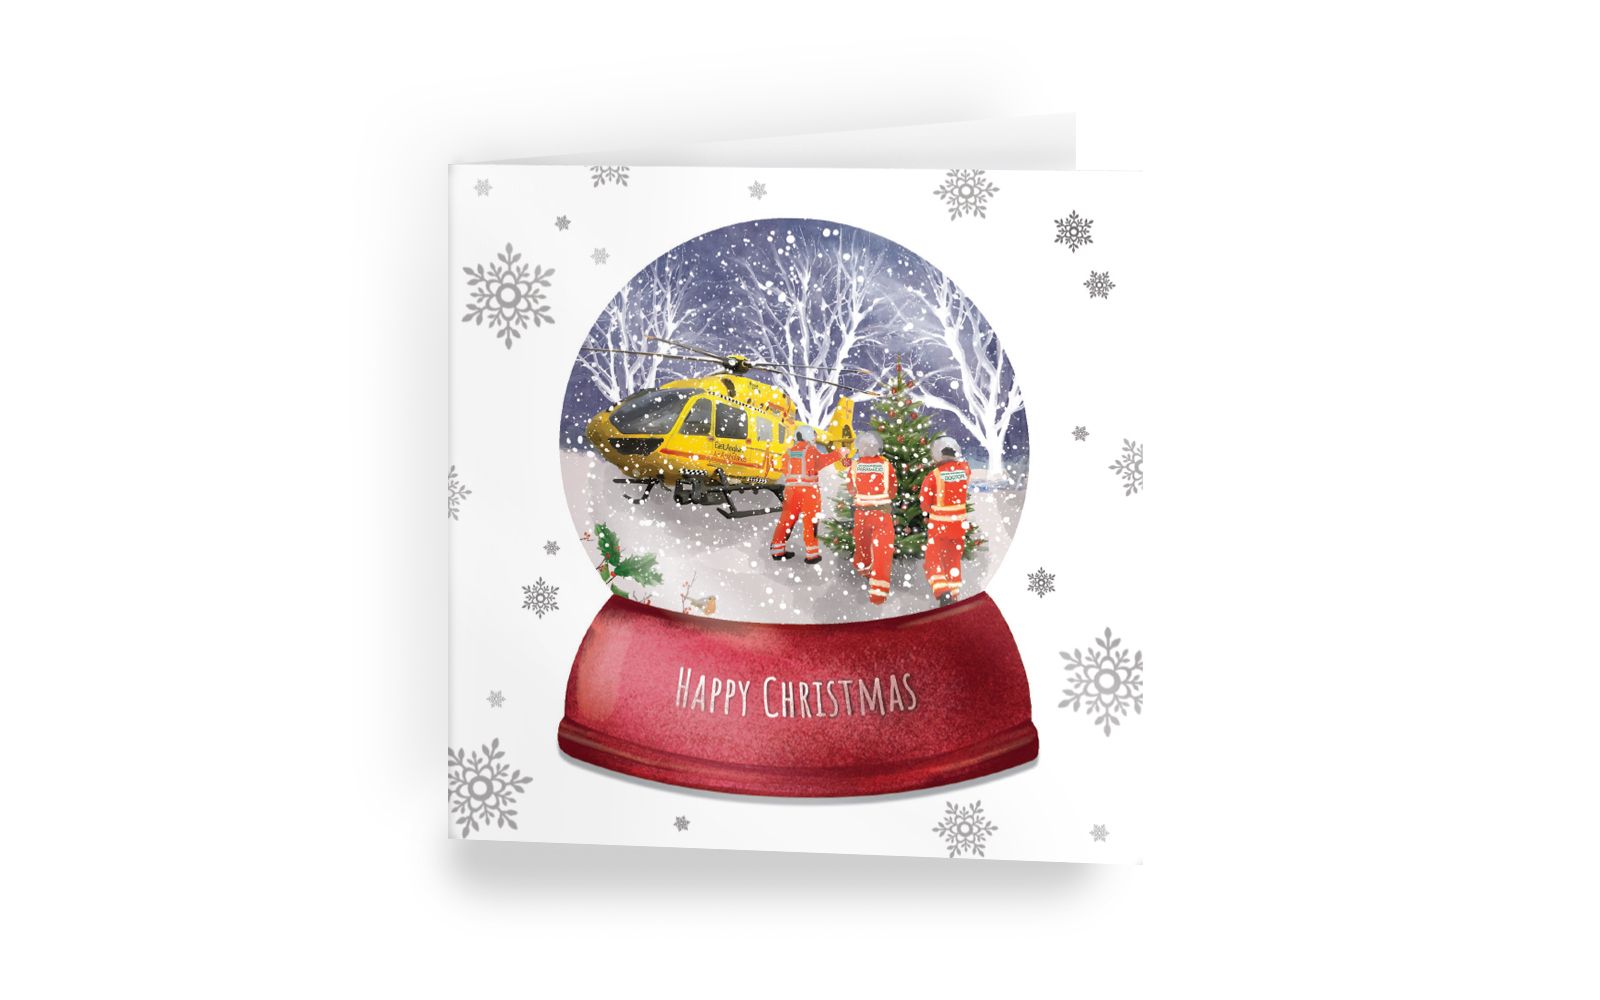 ‘Snow Globe’ Christmas cards